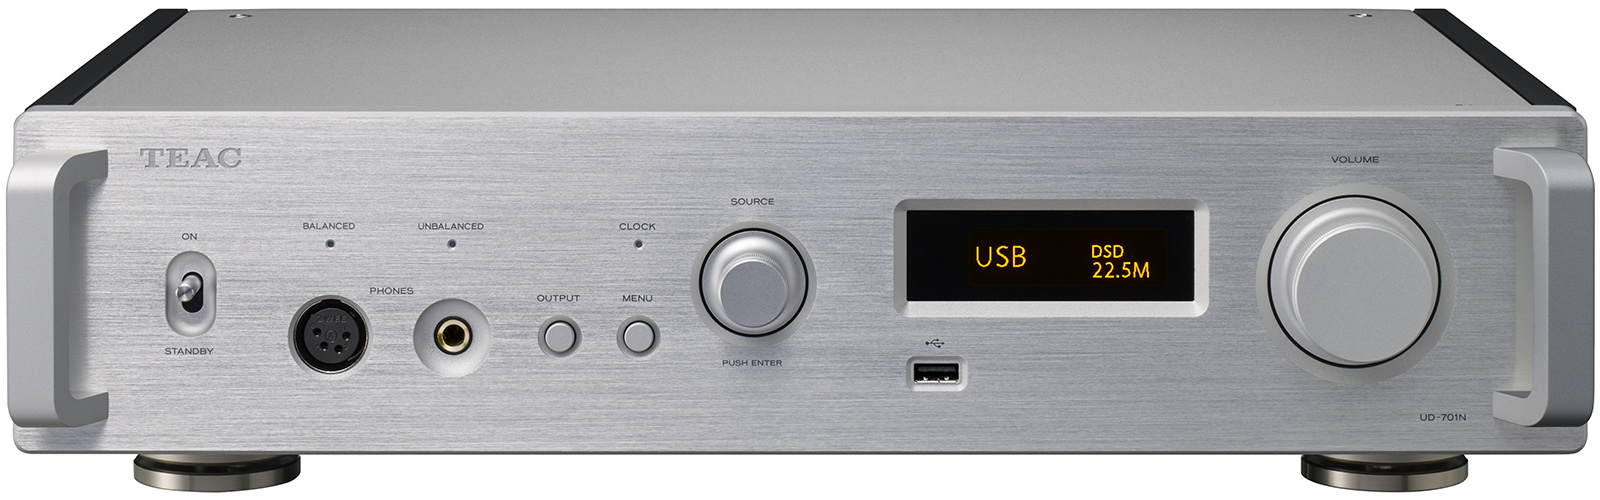 Сетевые аудио проигрыватели Teac UD-701N silver сетевые аудио проигрыватели yba heritage r100 silver